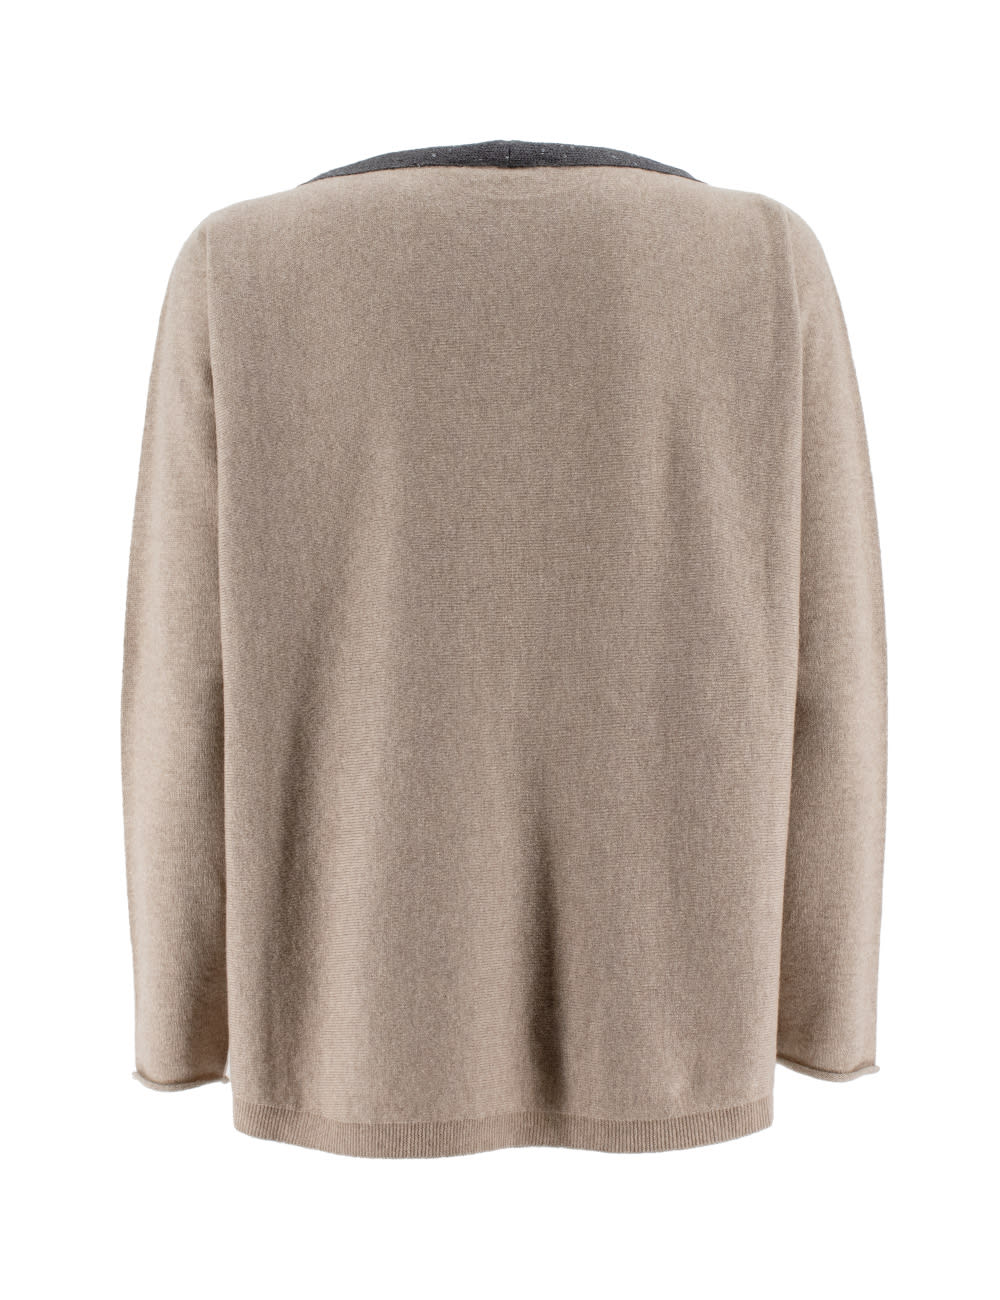 Shop Le Tricot Perugia Sweater In D.beige/d.grey